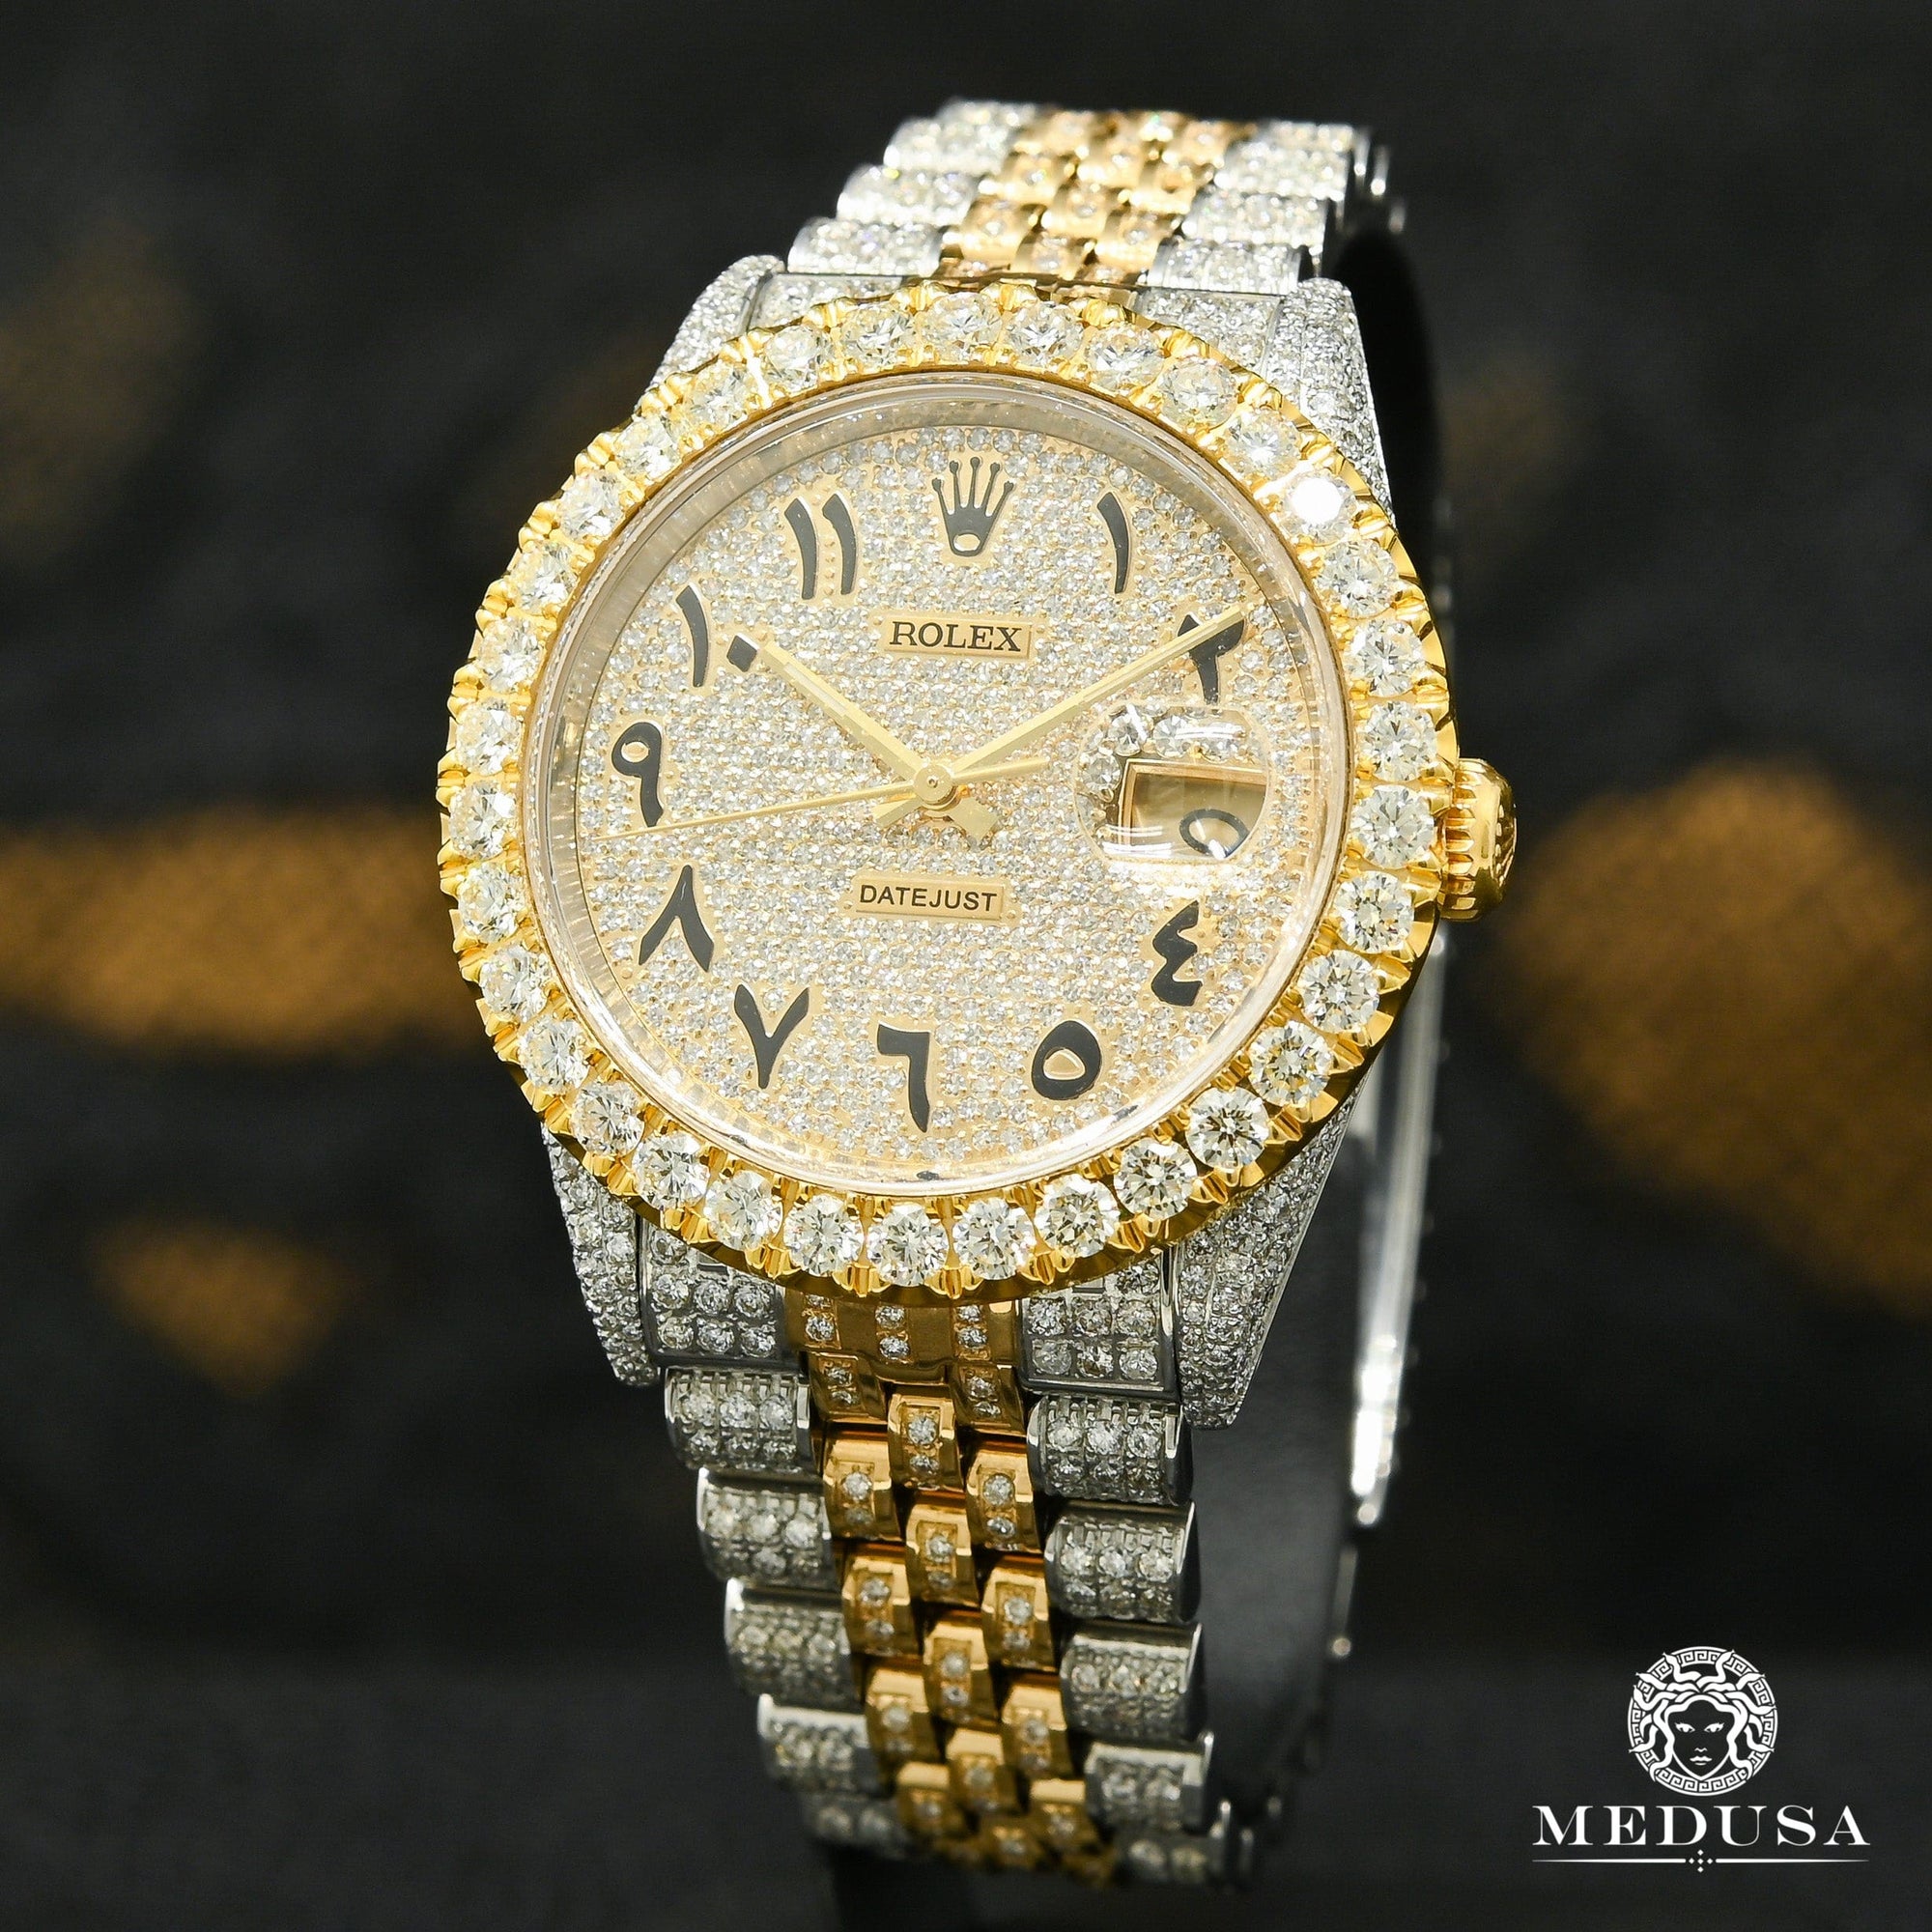 Rolex watch | Rolex Datejust Men's Watch 36mm - Full Iced Arabic Two-Tone Gold 2 Tones